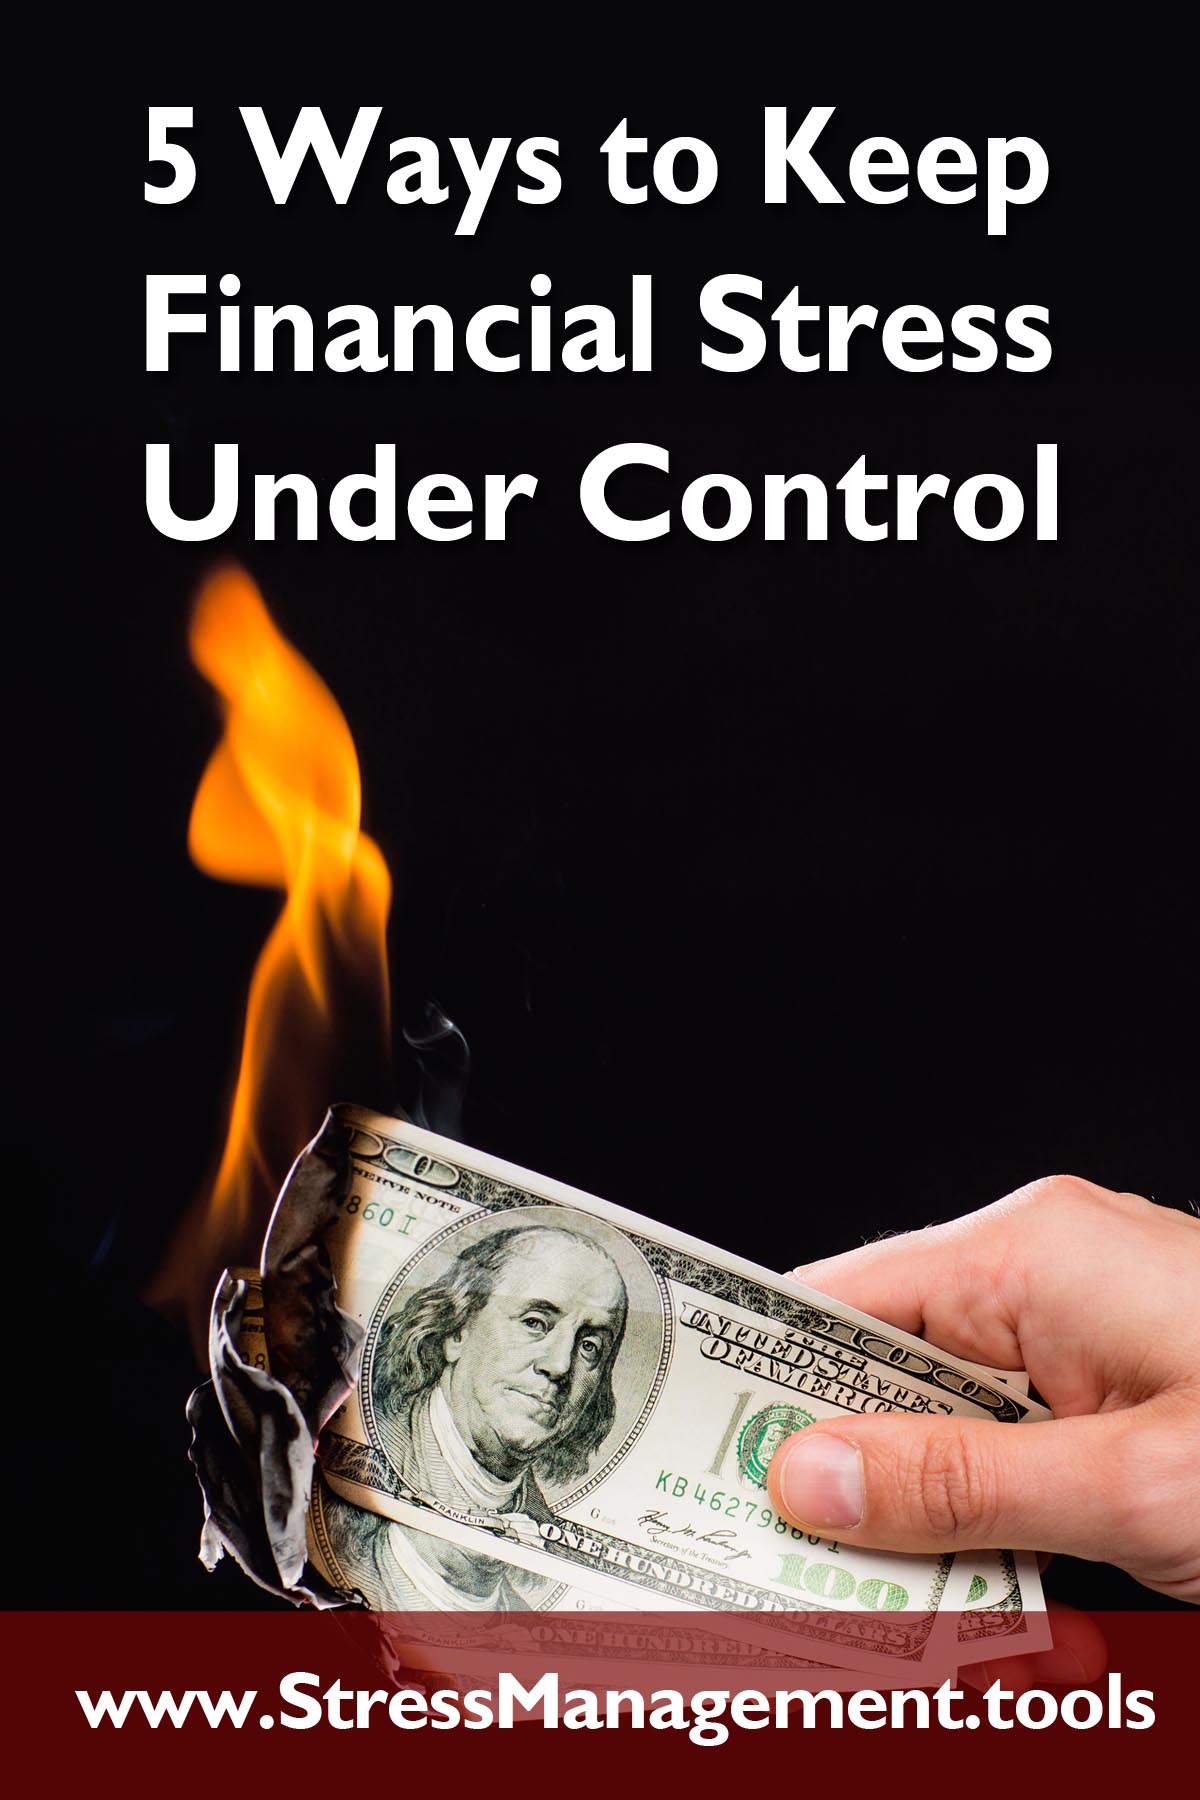 5 Ways to Keep Financial Stress Under Control